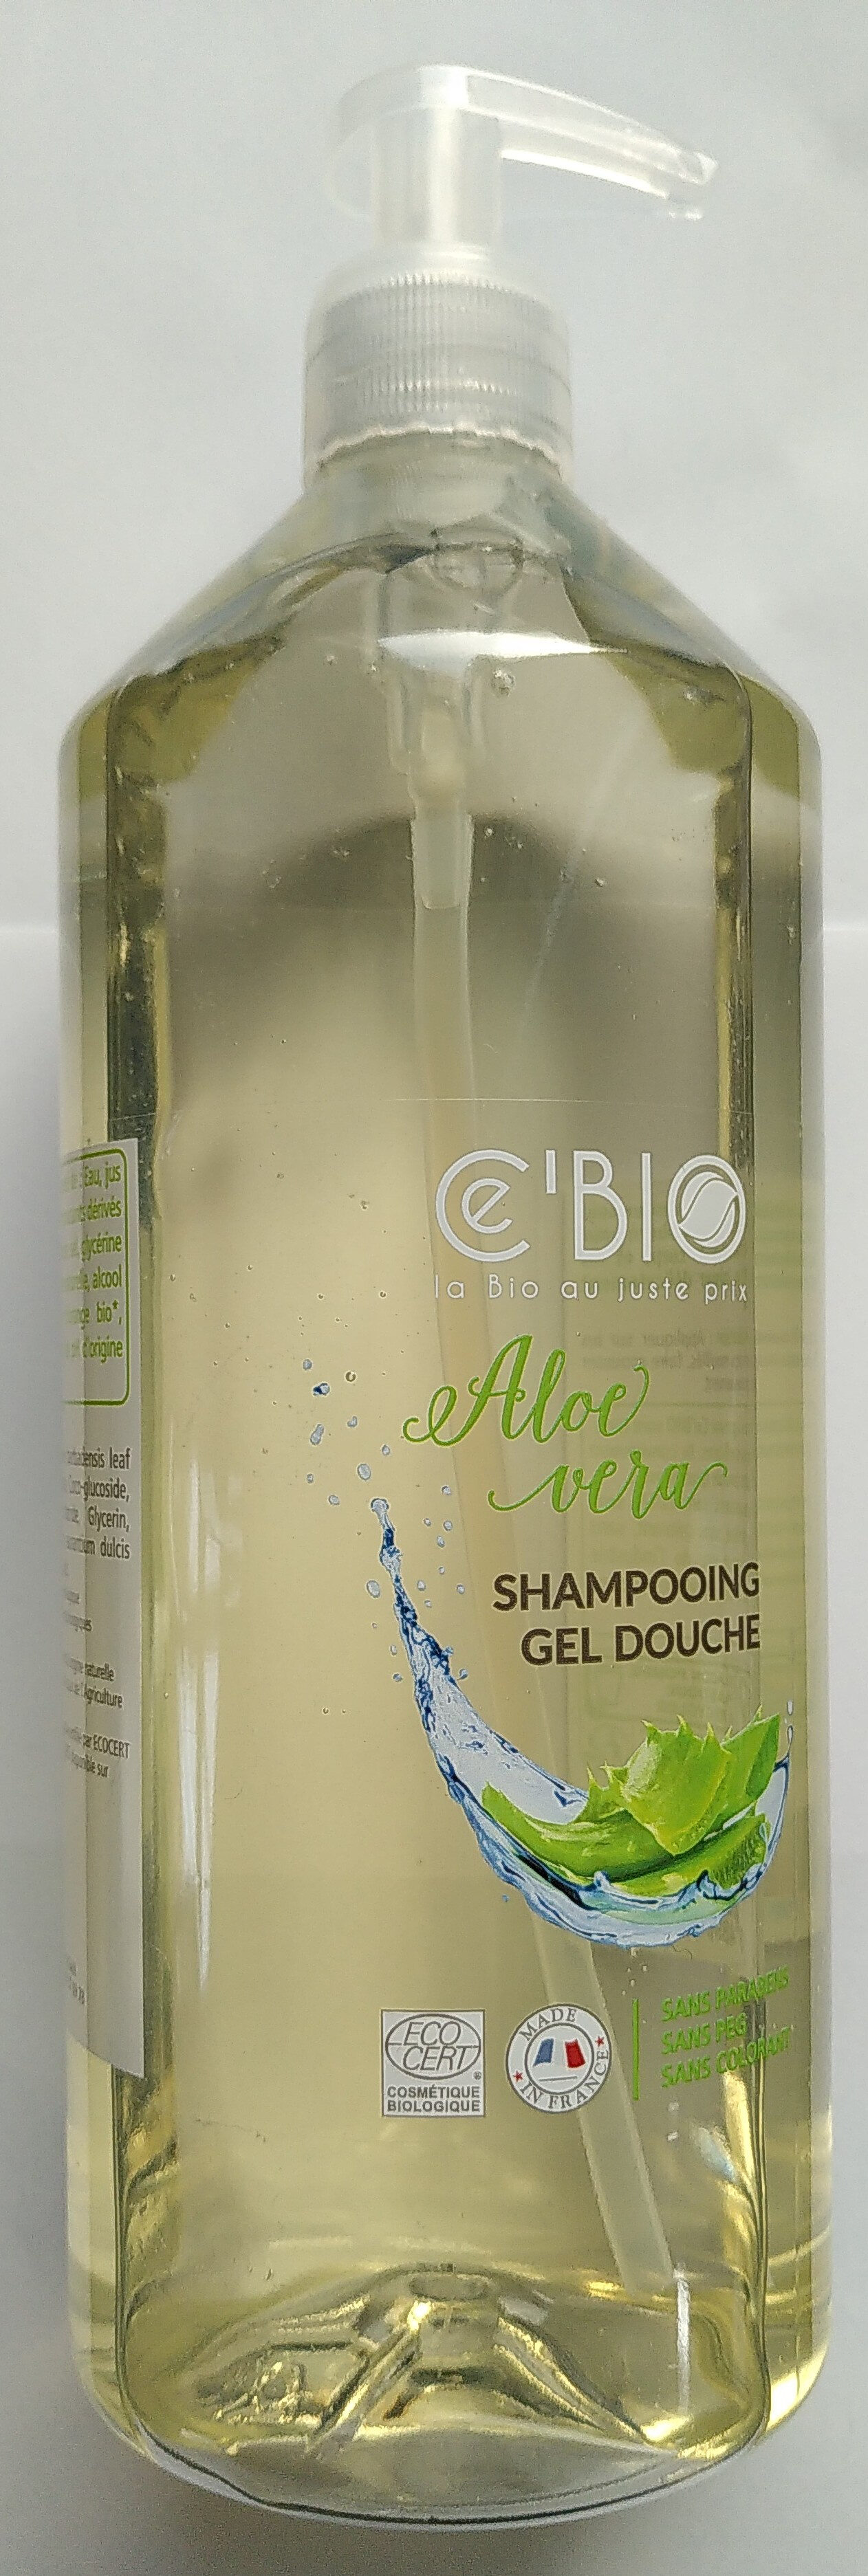 Shampooing gel douche Aloe vera - Produit - fr